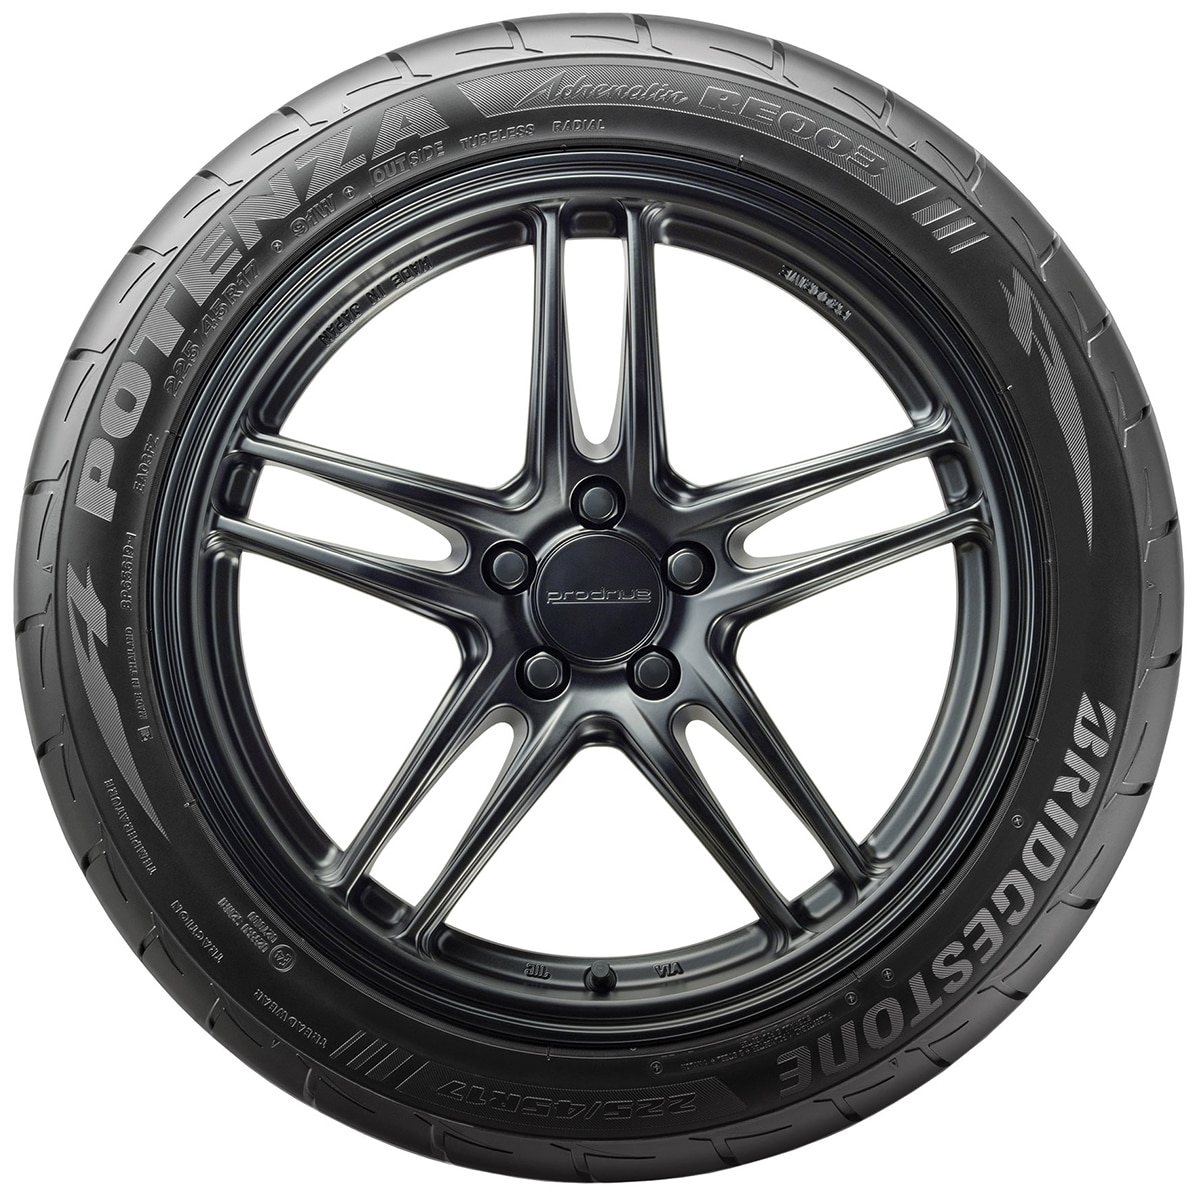 215/40R17 87W XL RE003 BS - Tyre